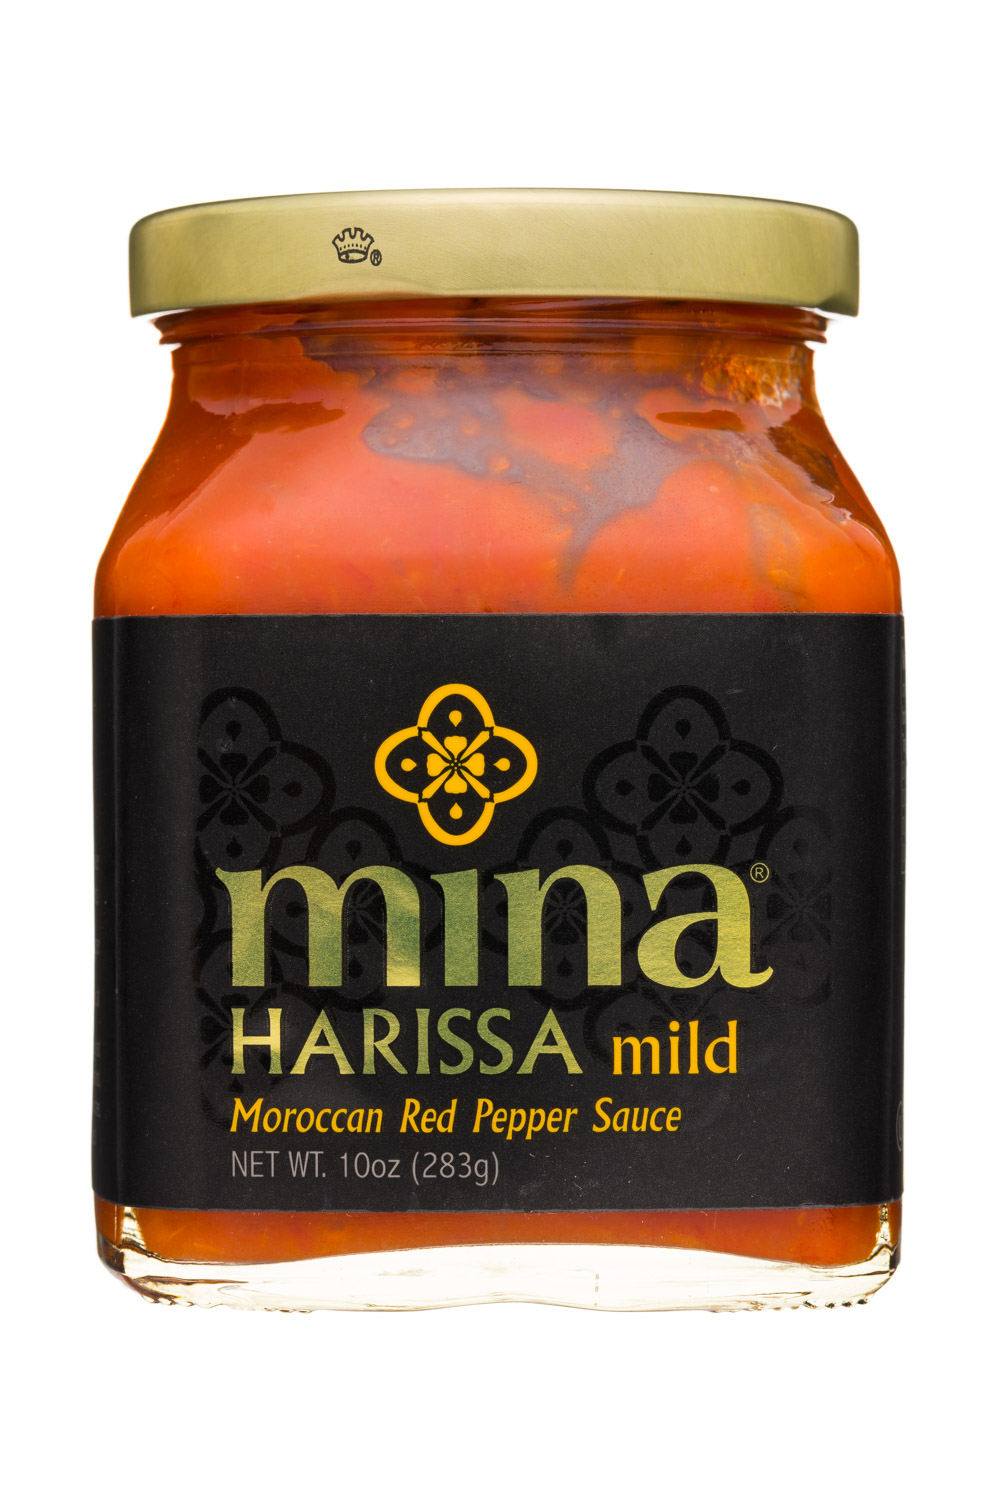 Harissa Mild, Moroccan Red Pepper Sauce